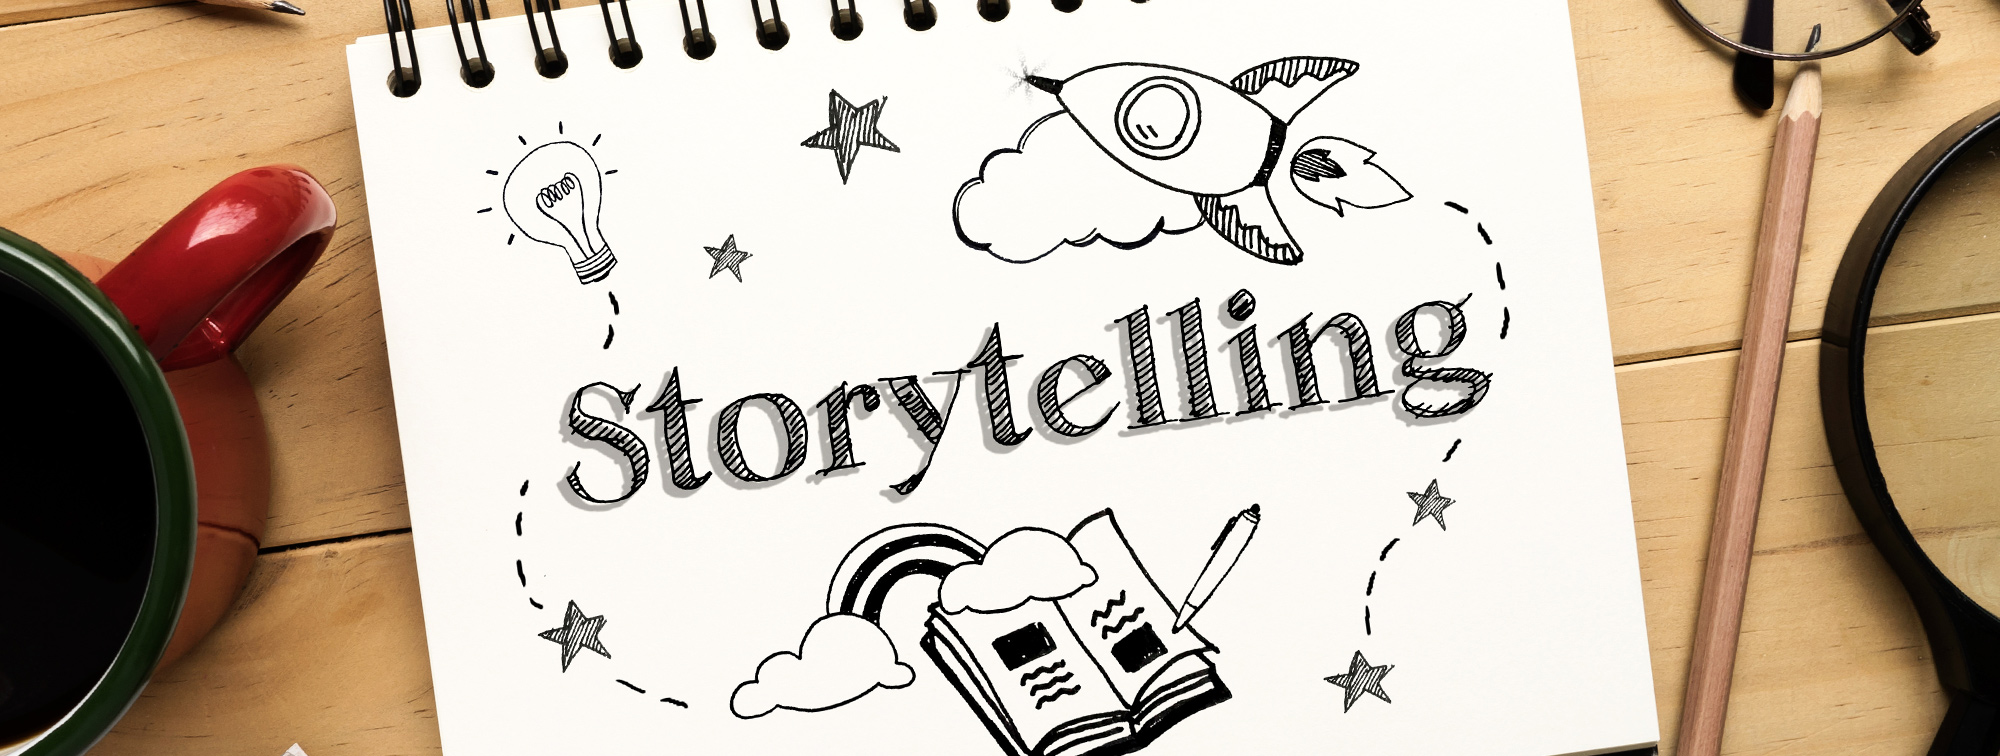 2105_Storytelling_Header